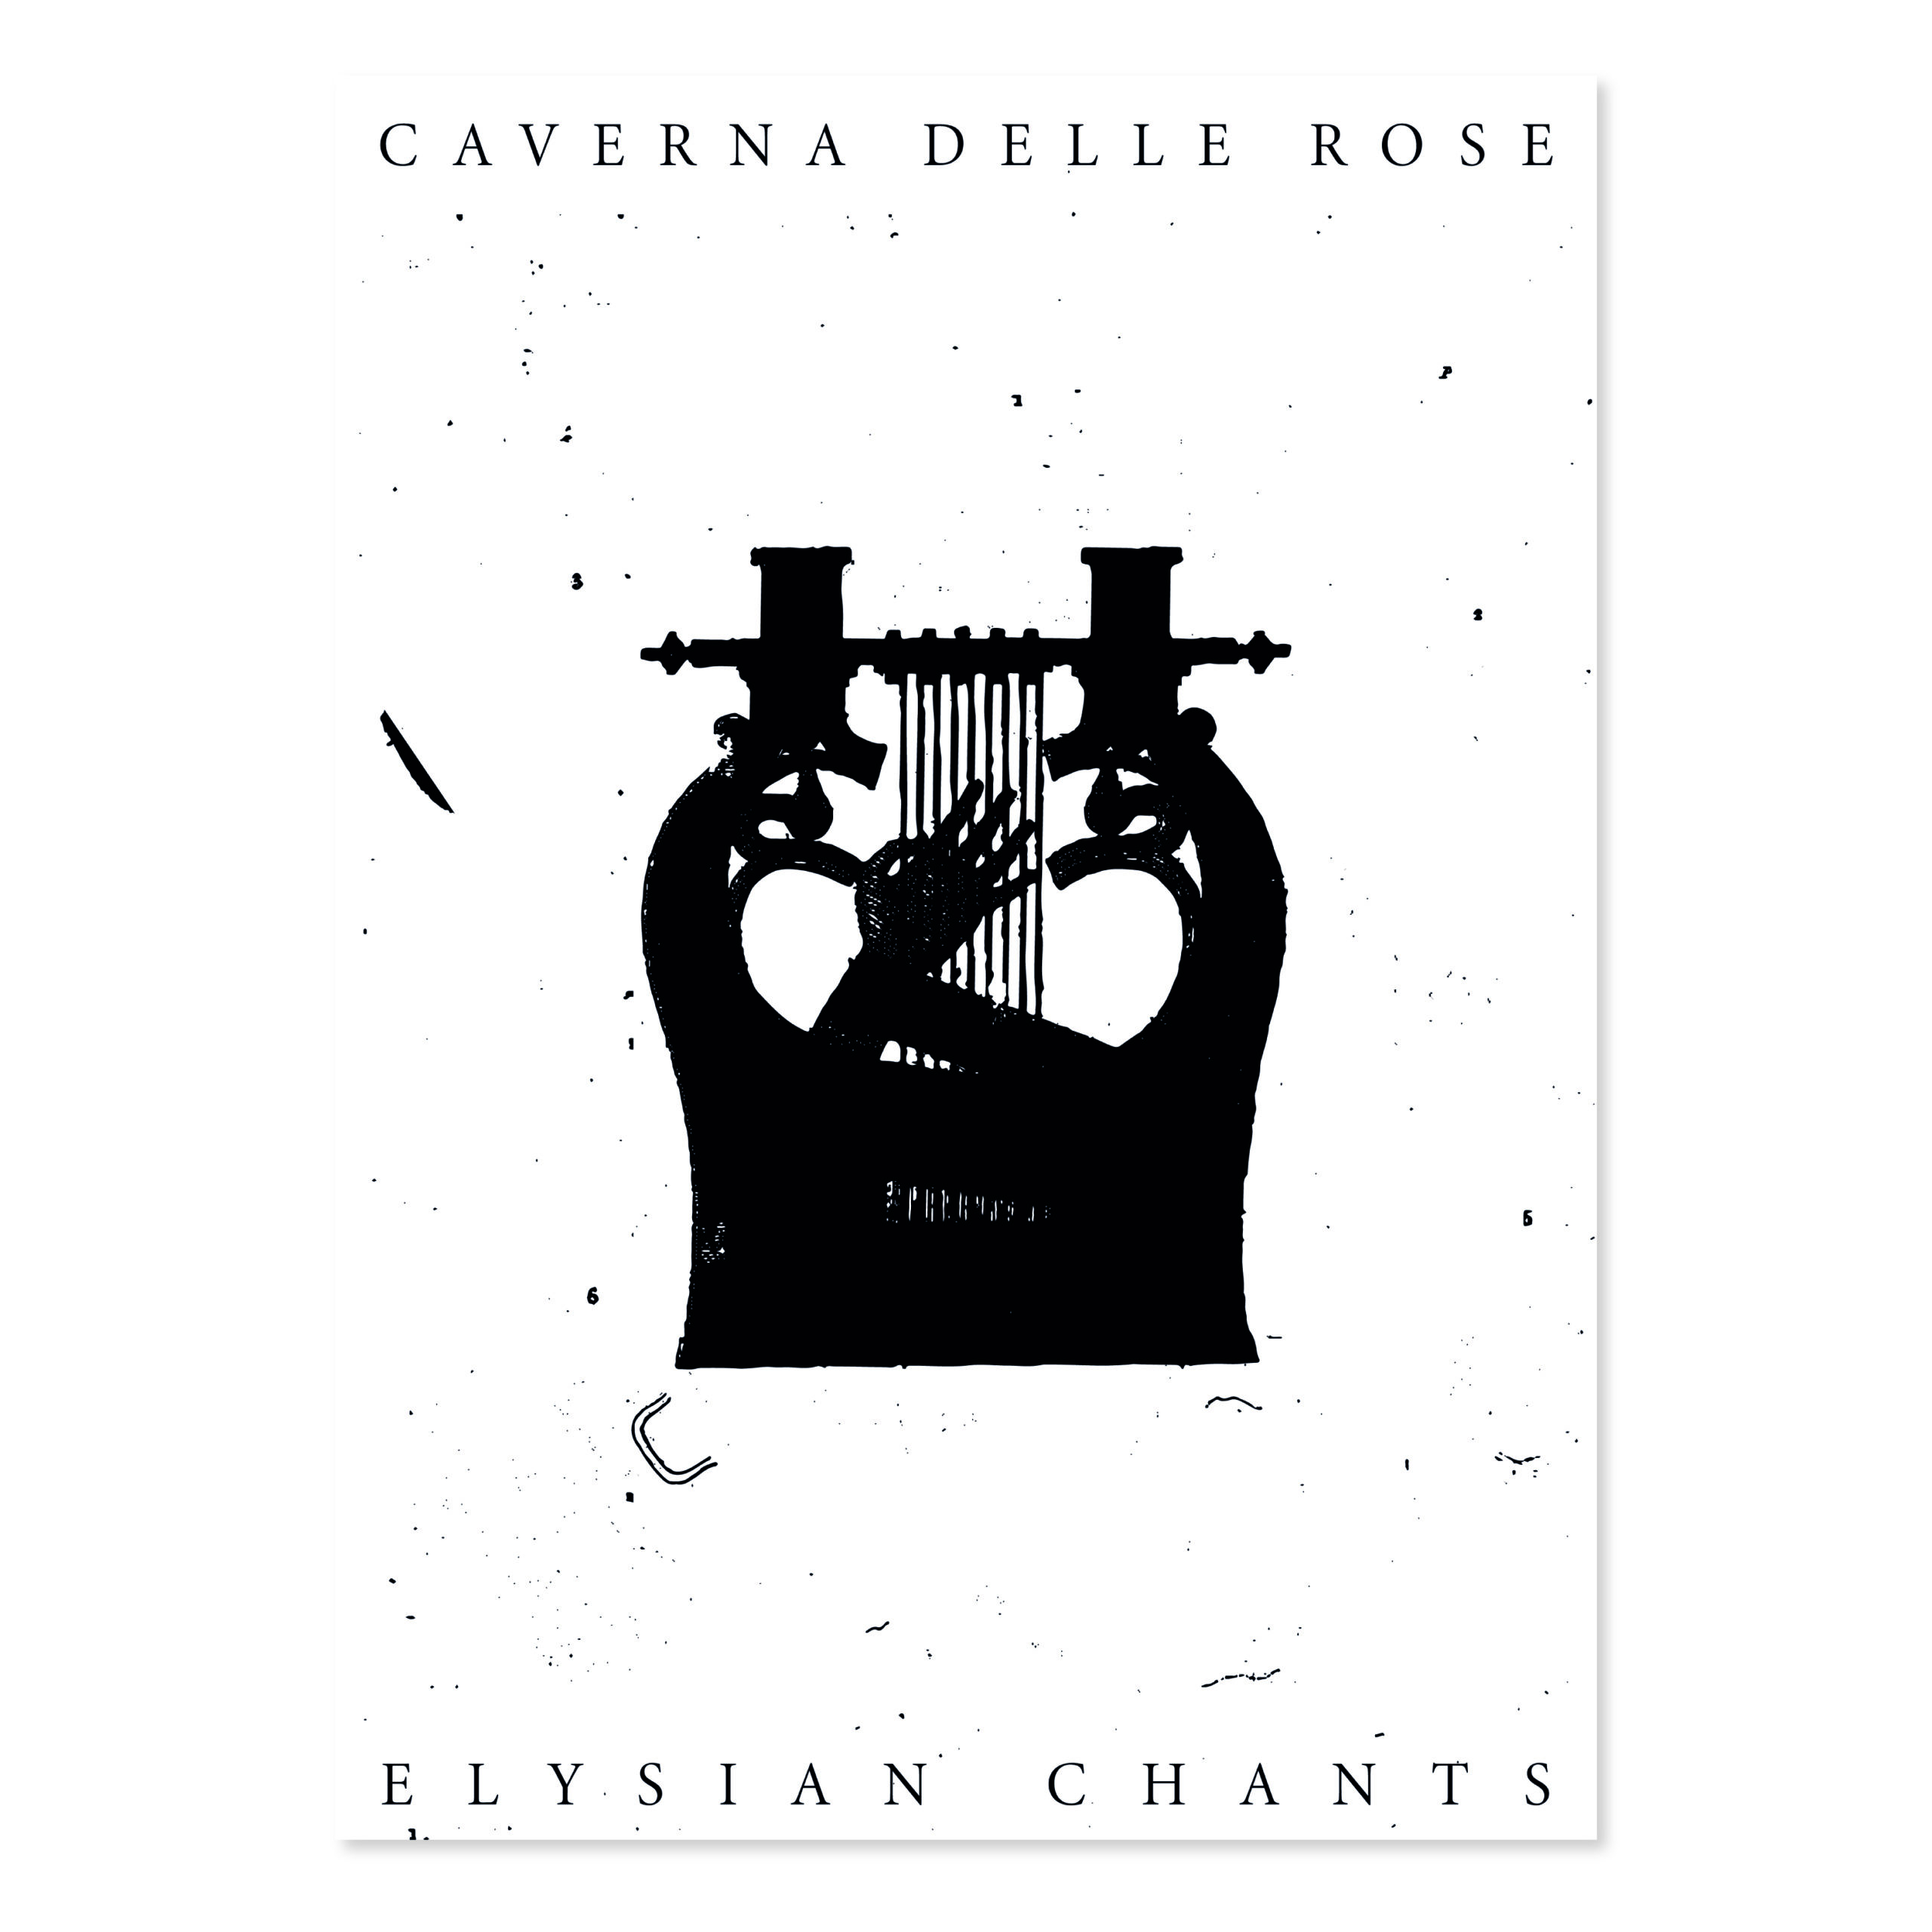 caverna-delle-rose-elysian-chants-music-ritual-neofolk-poster-©-2021-diego-cinquegrana-aimaproject-sa-01